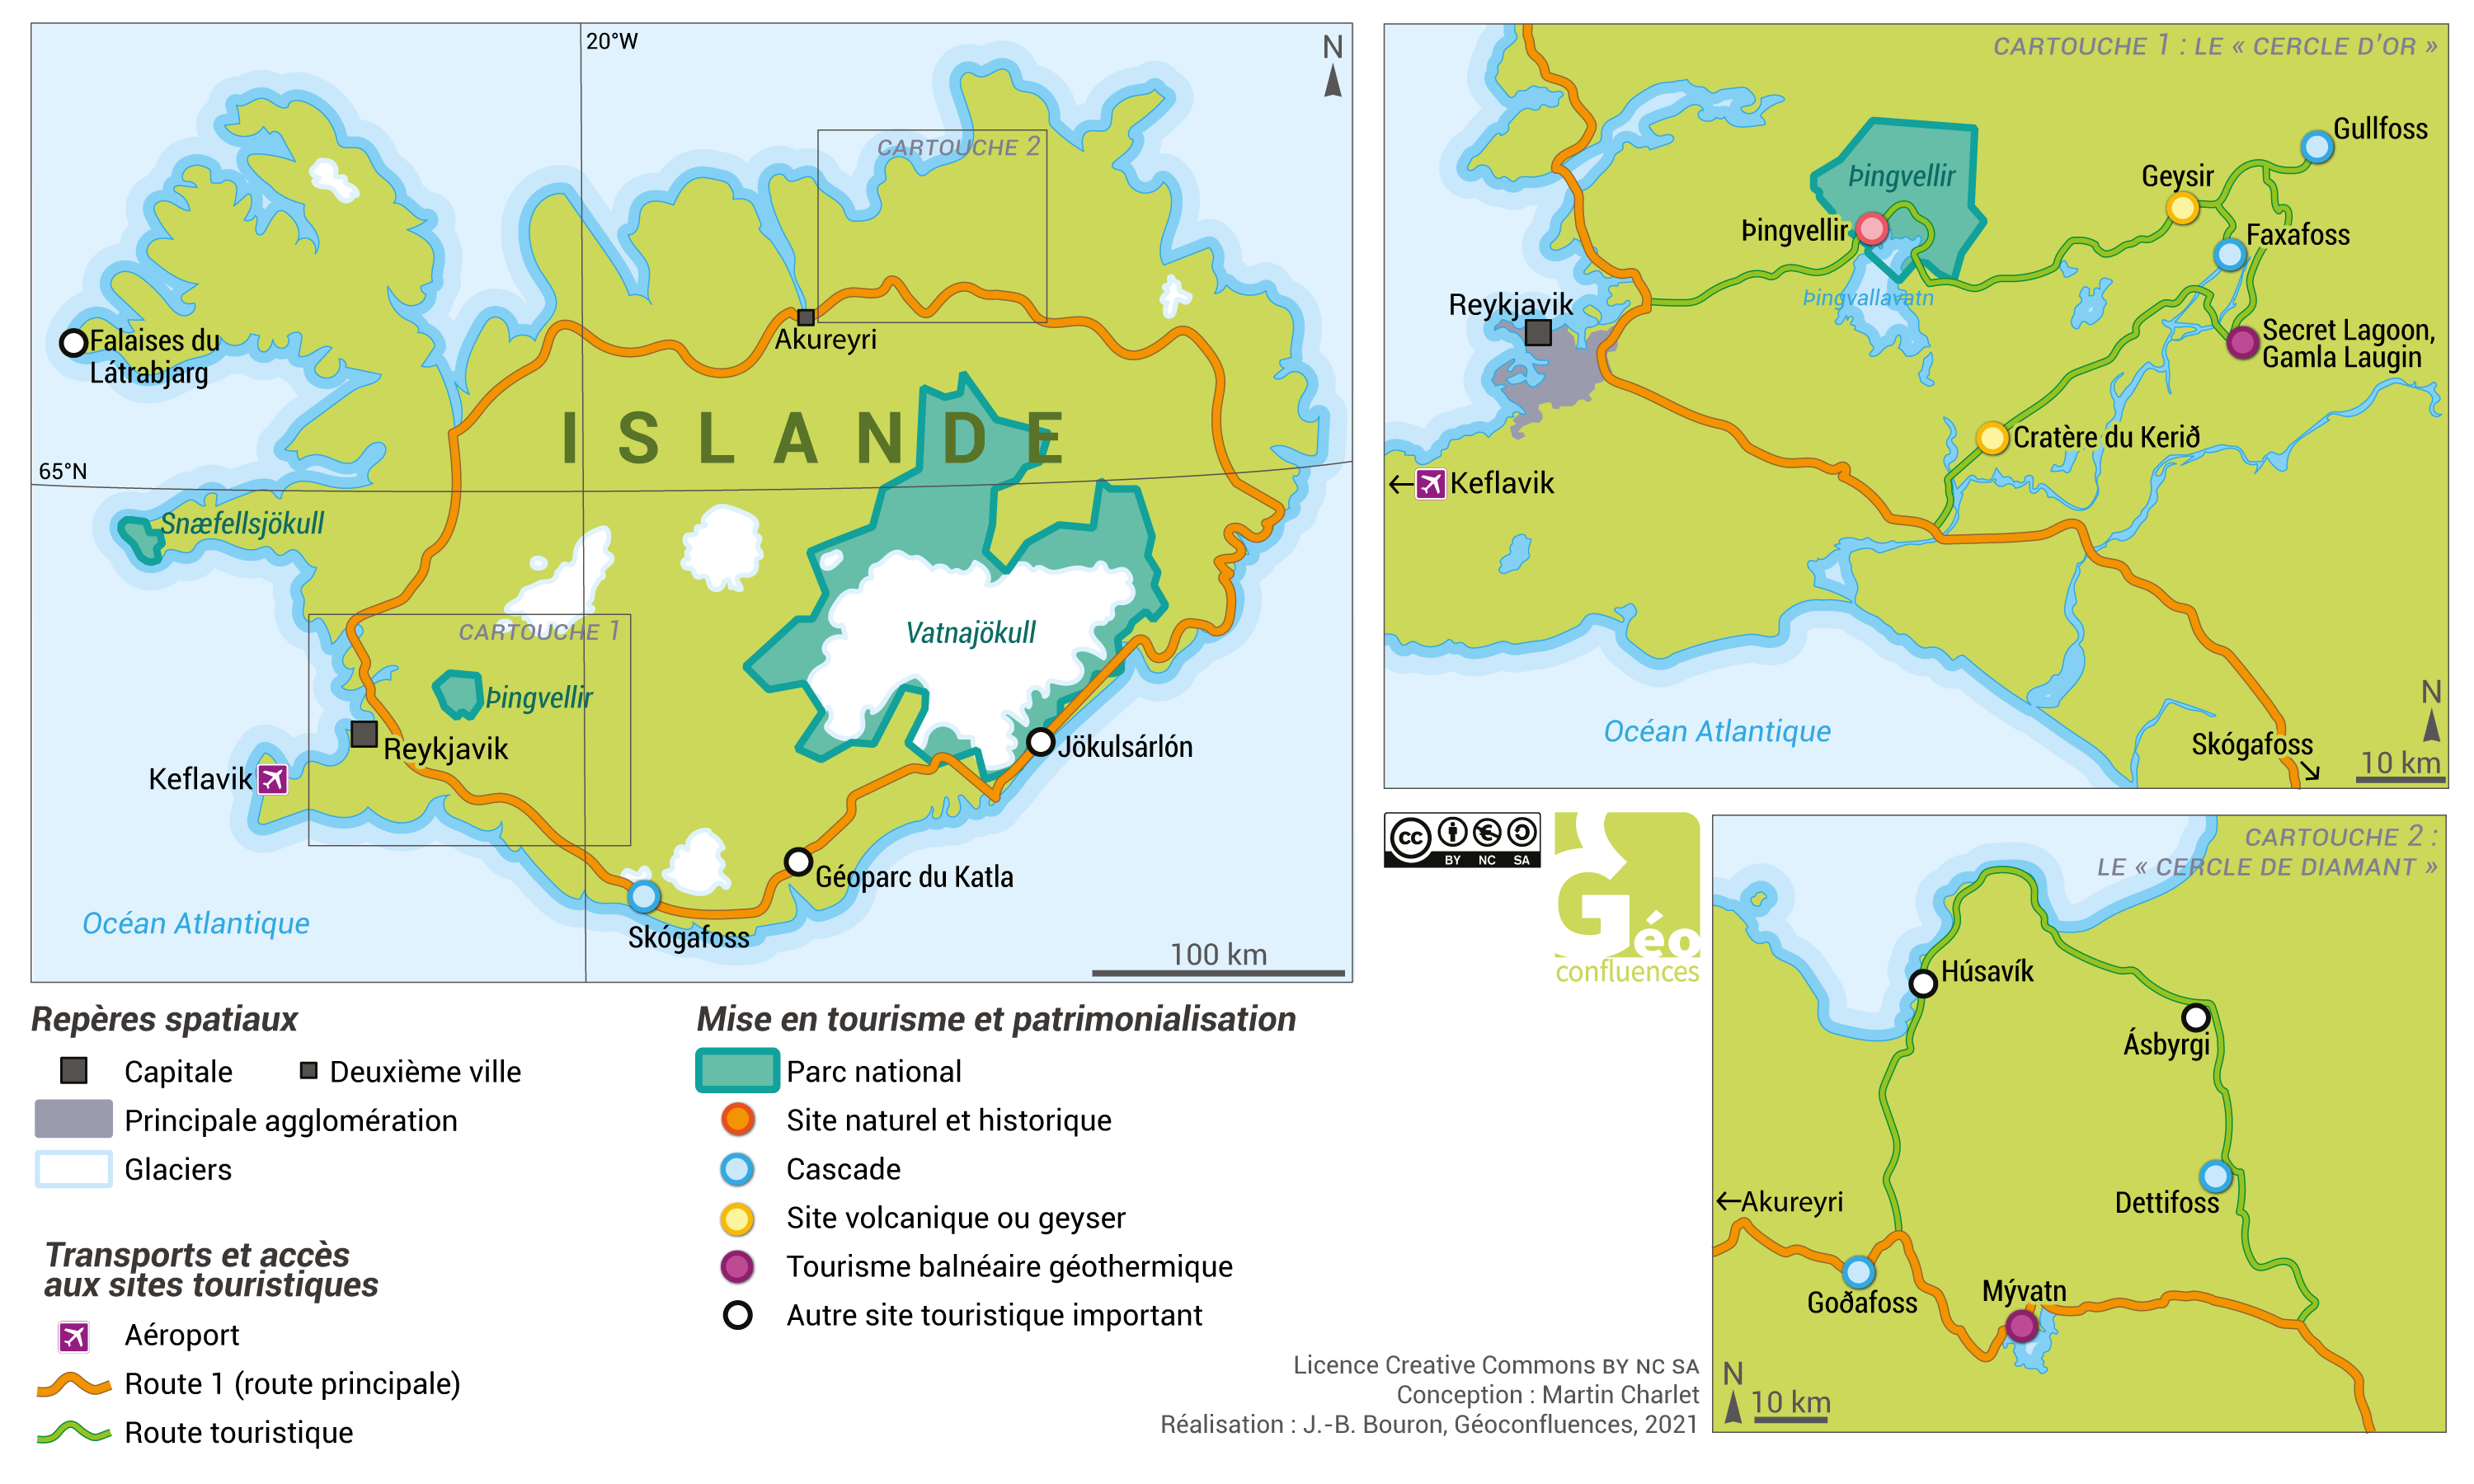 Islande, carte de localisation (haute définition)